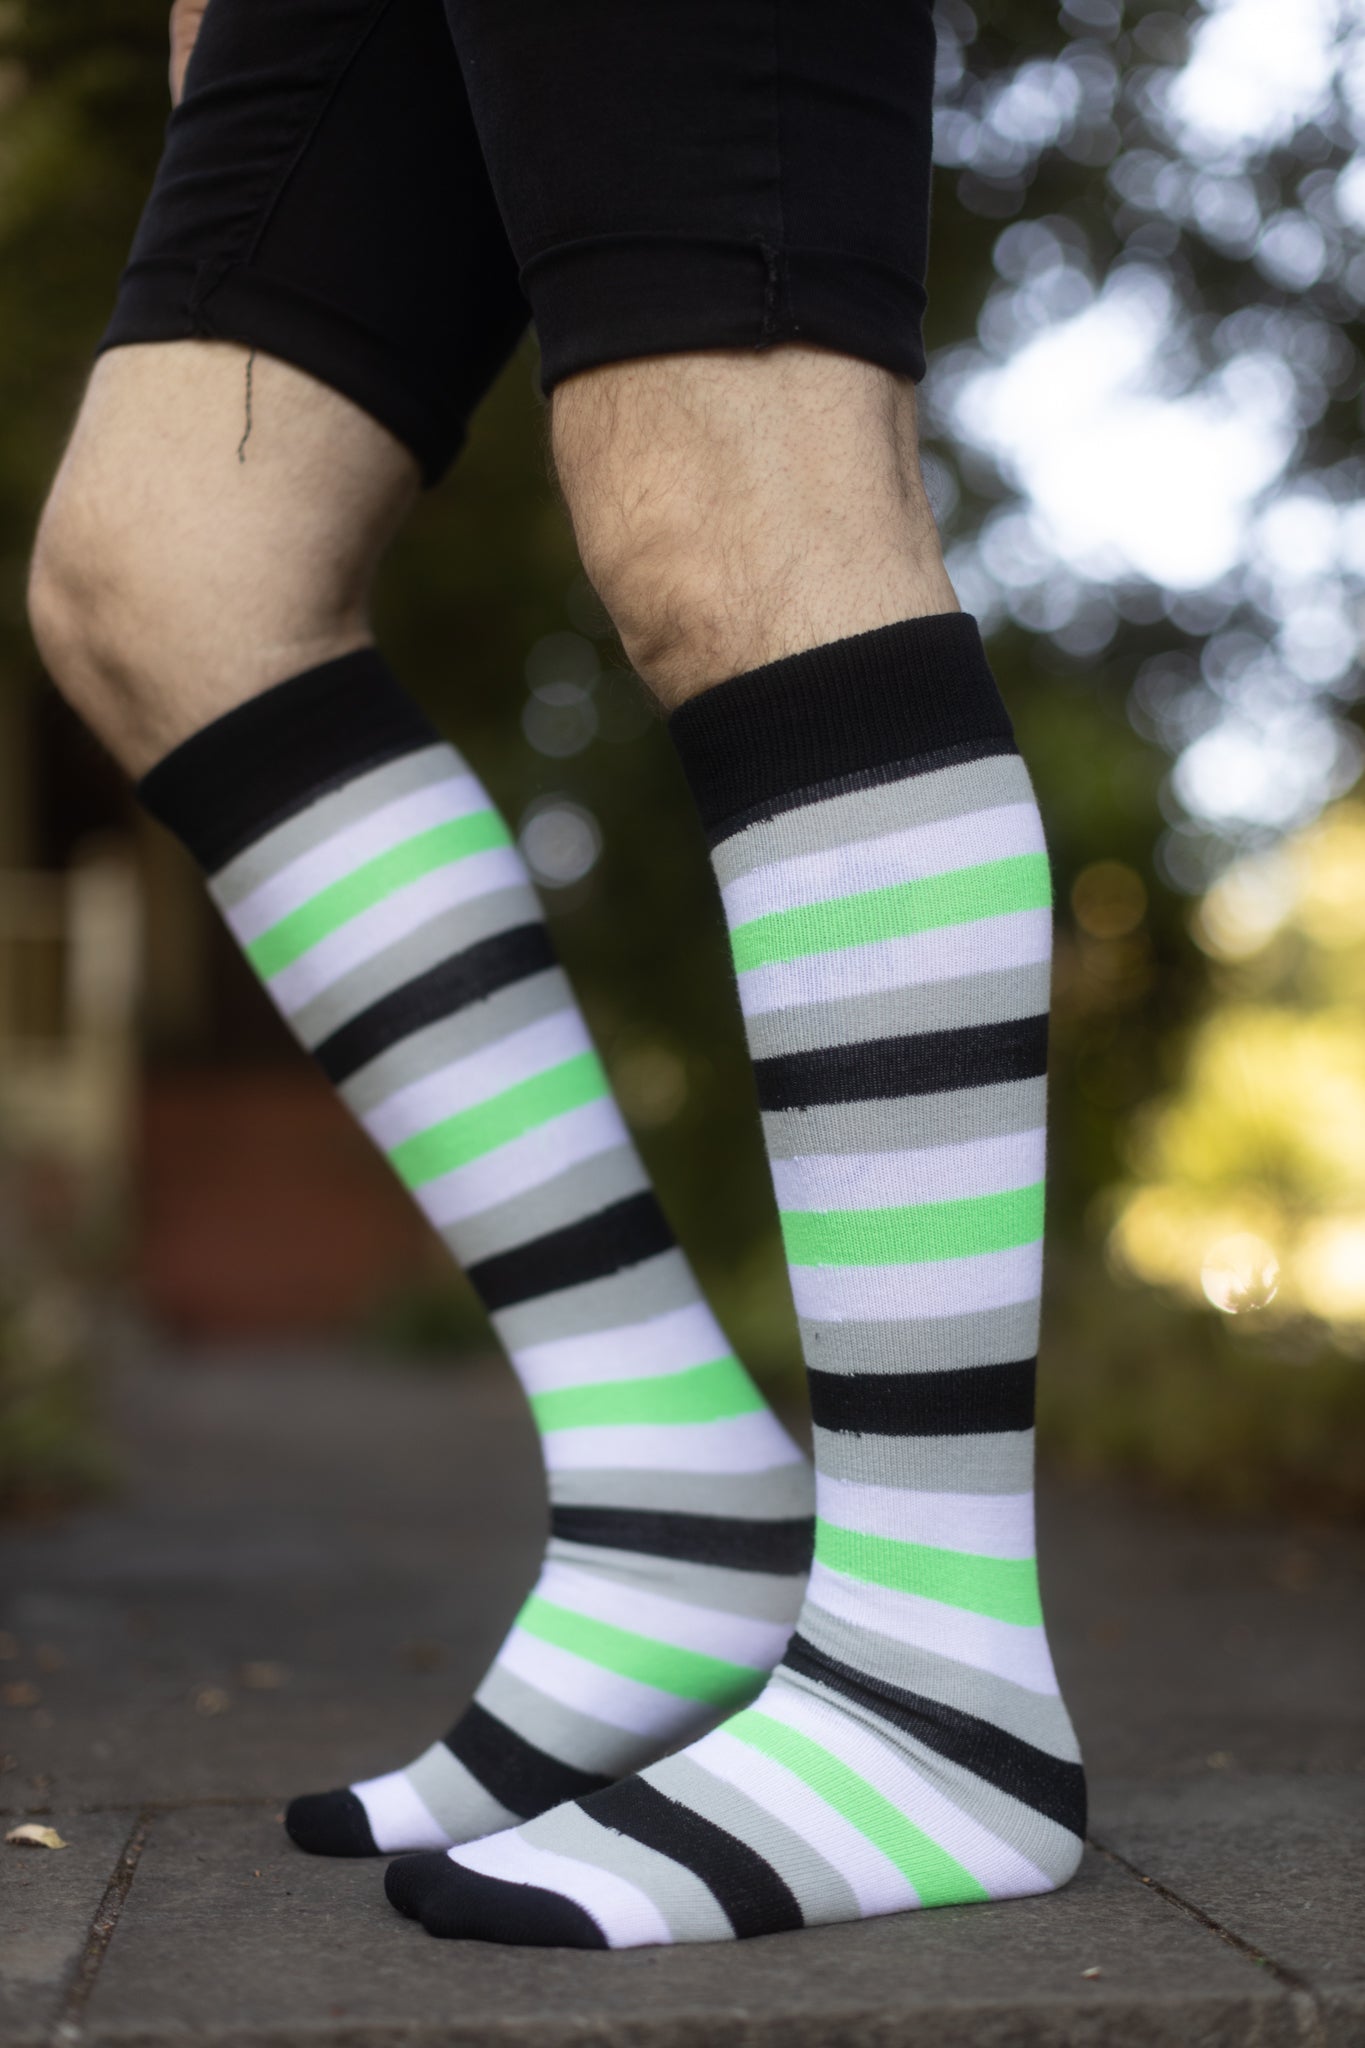 Pride Stripes Knee High Socks – Sock Dreams